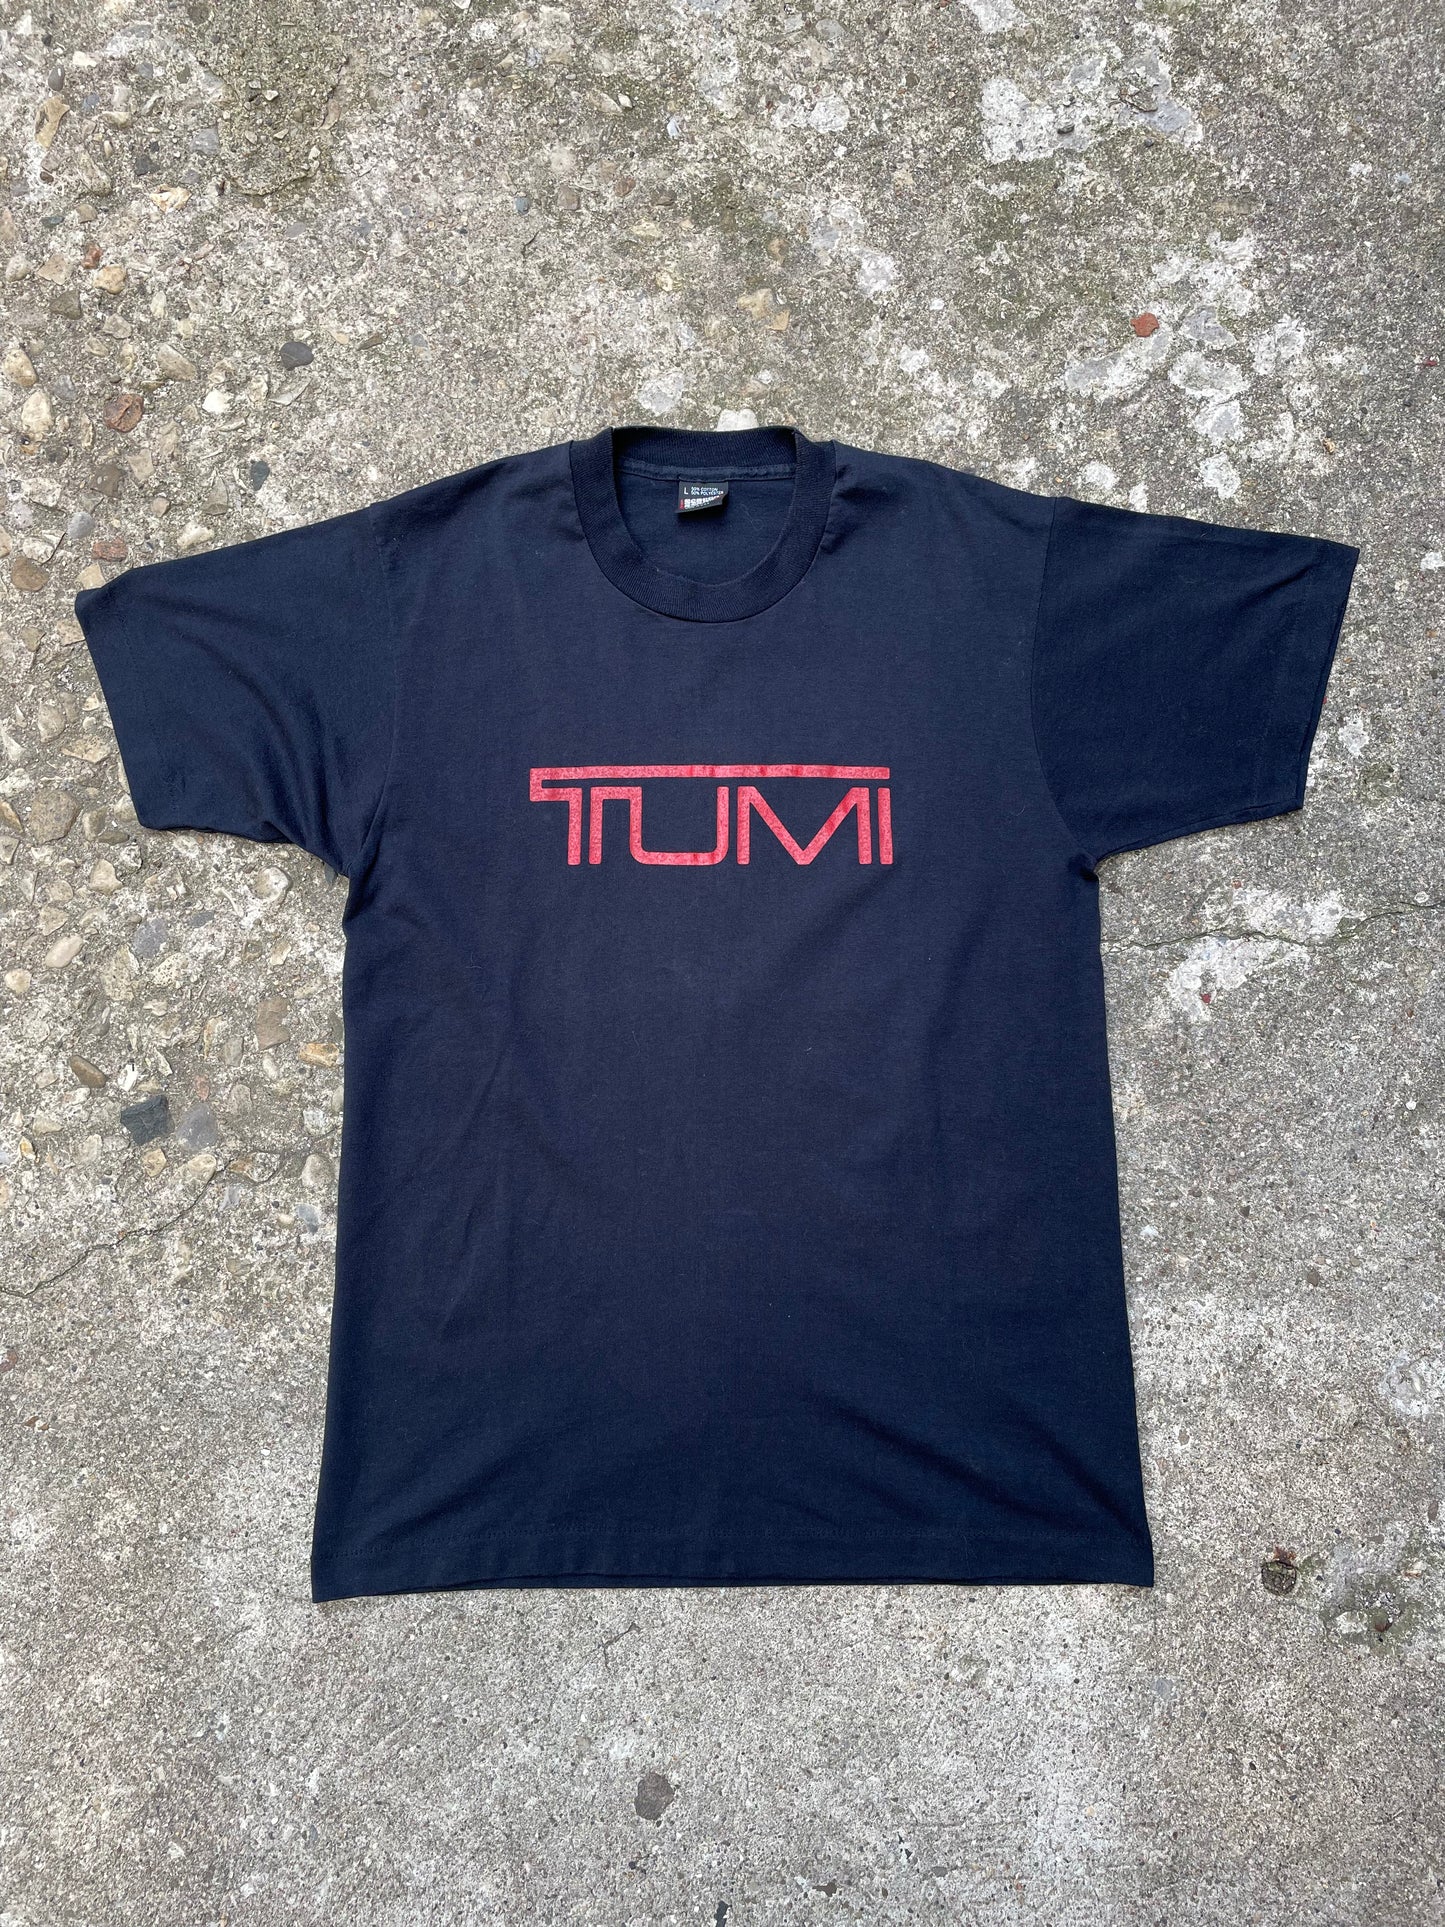 1990's Tumi Graphic Logo T-Shirt - L